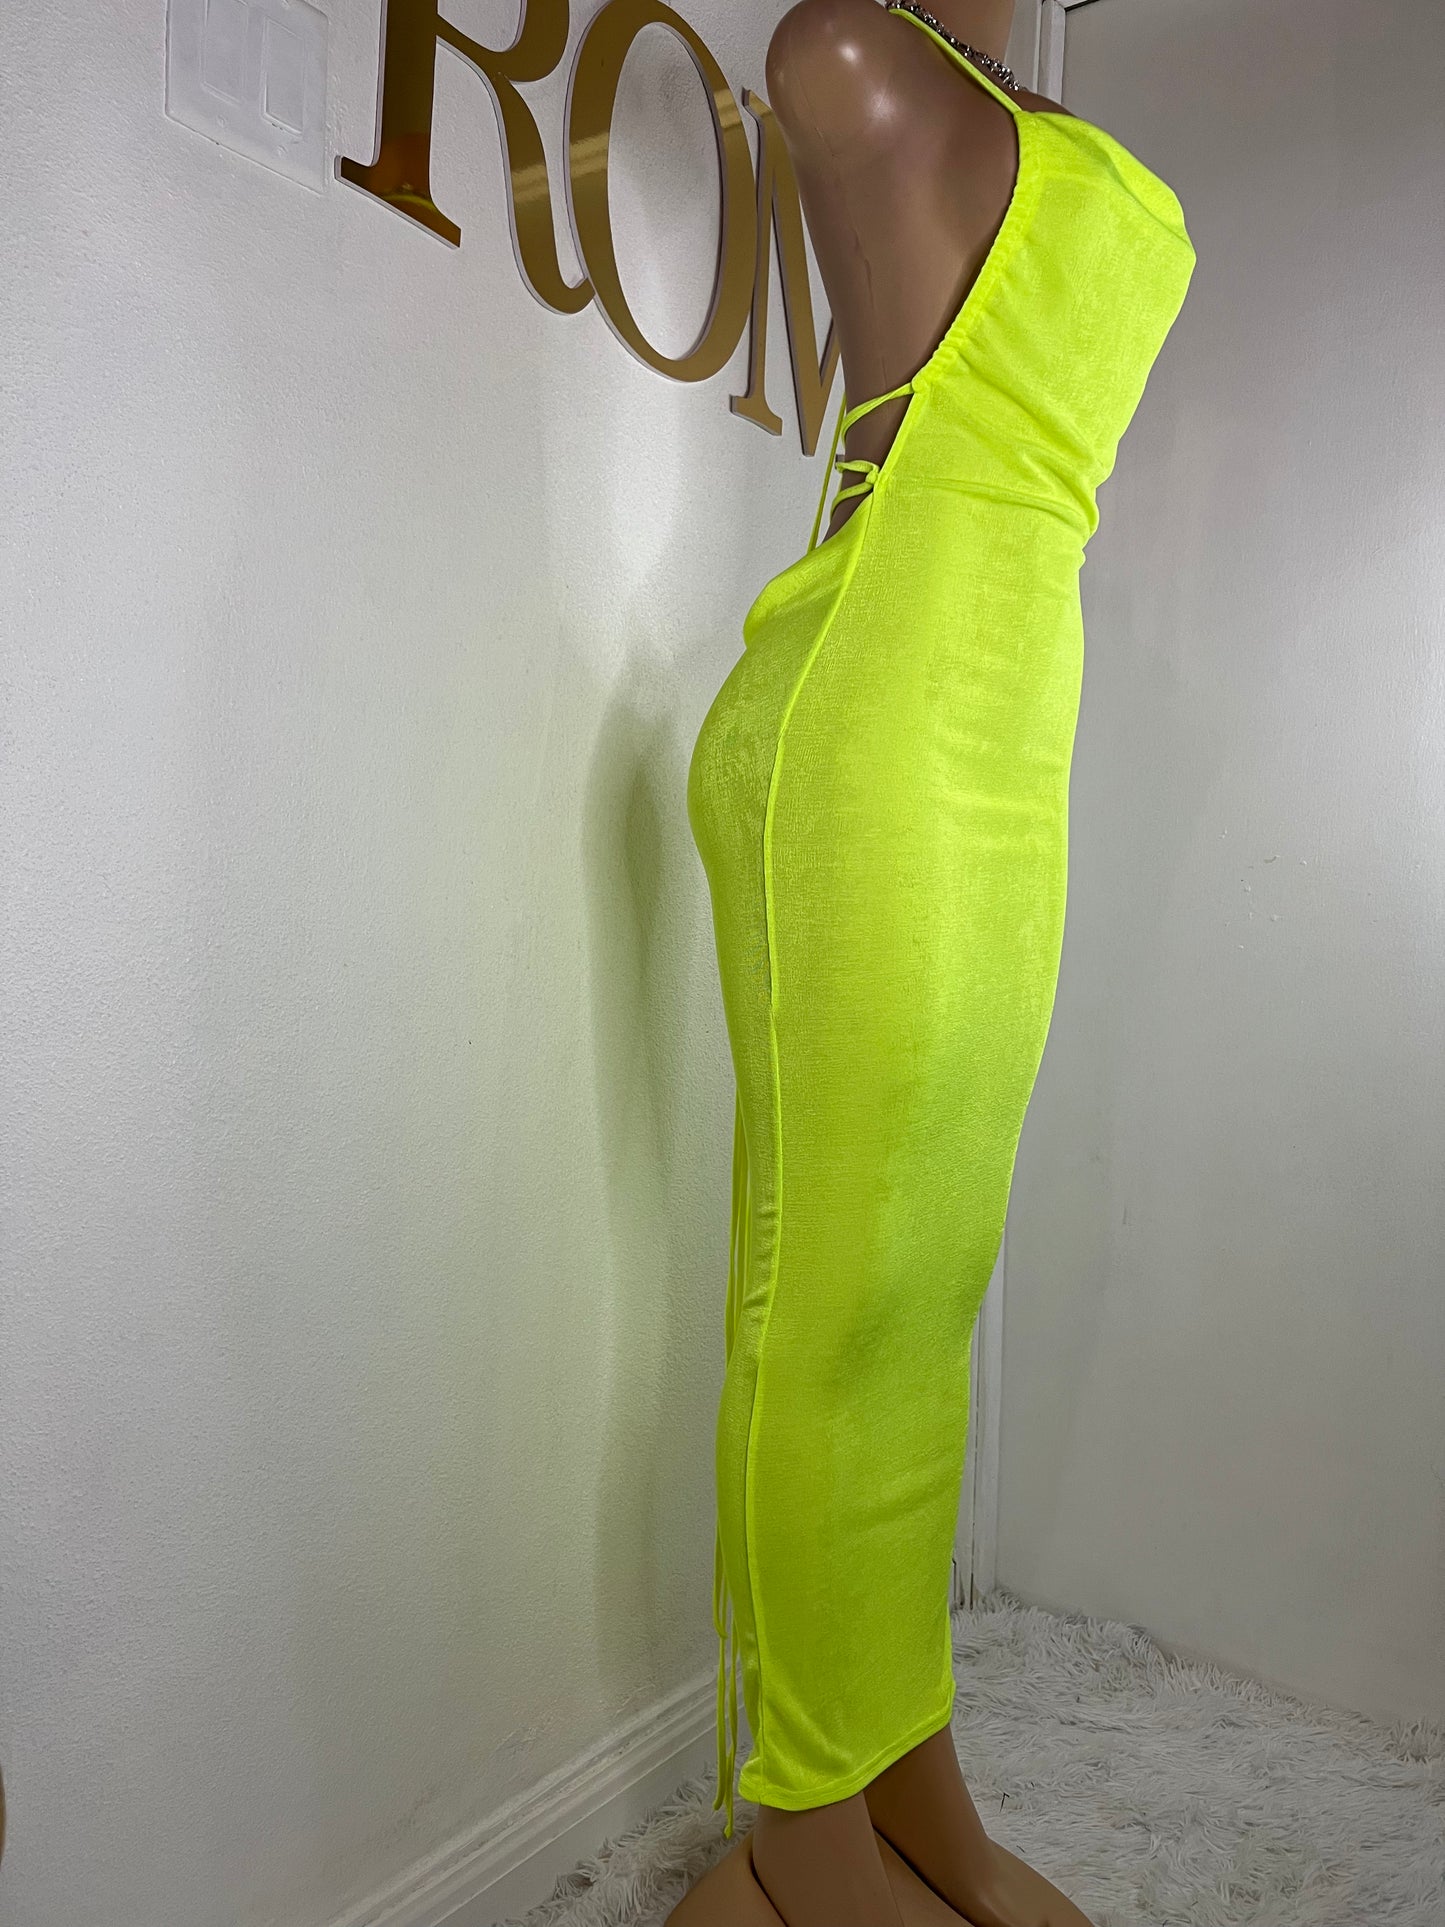 Carey Vibe Dress (Lime Green)